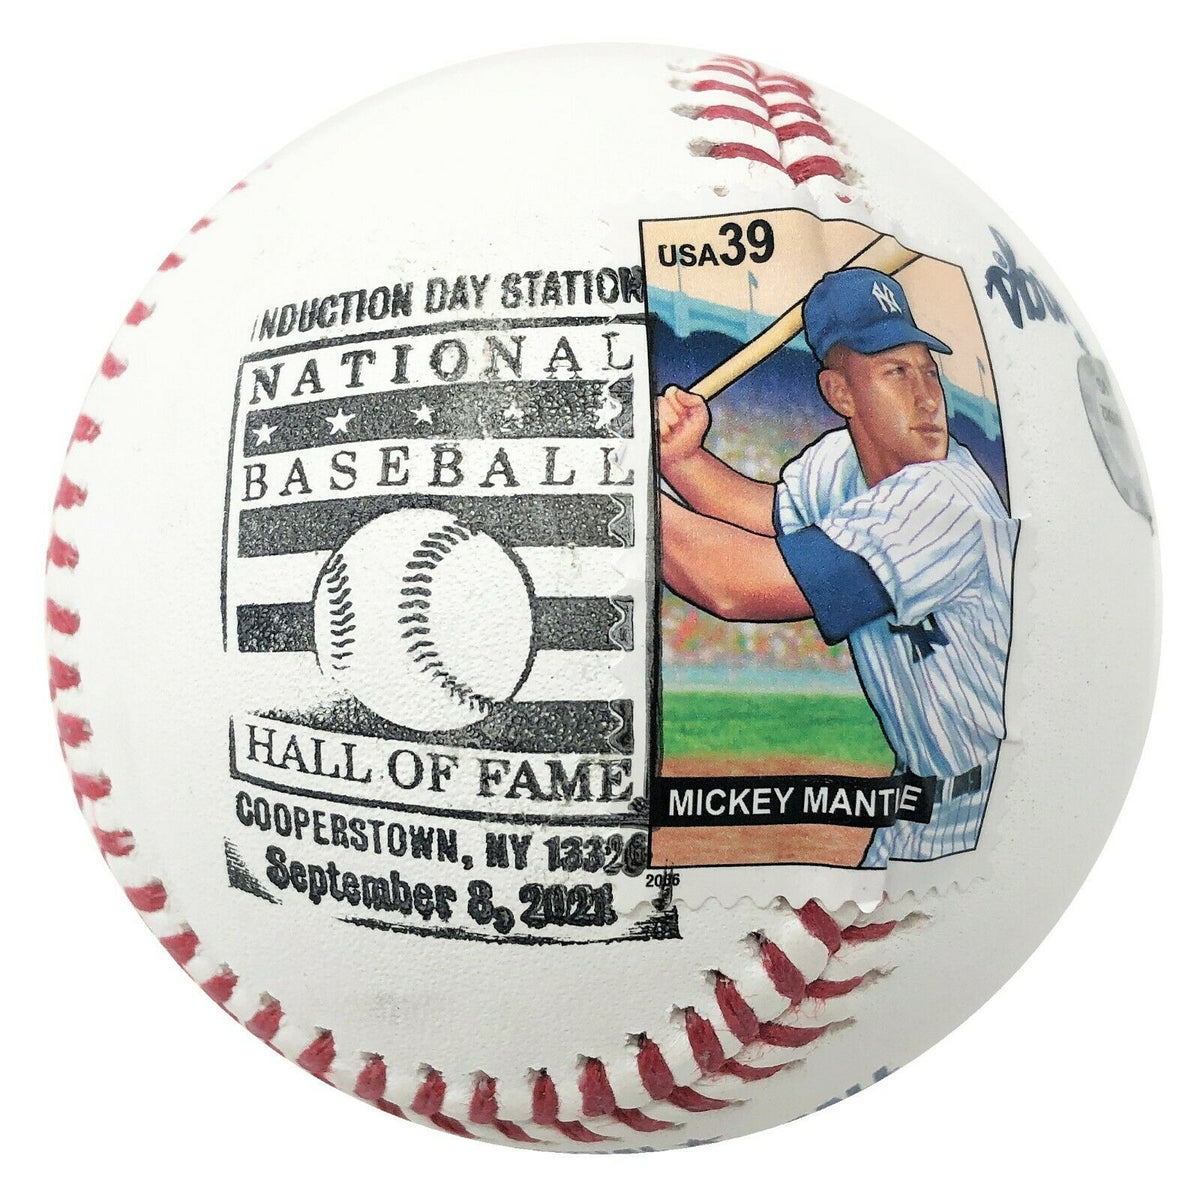 Derek Jeter New York Yankees 1995-2012 Hall Of Fame Signature t